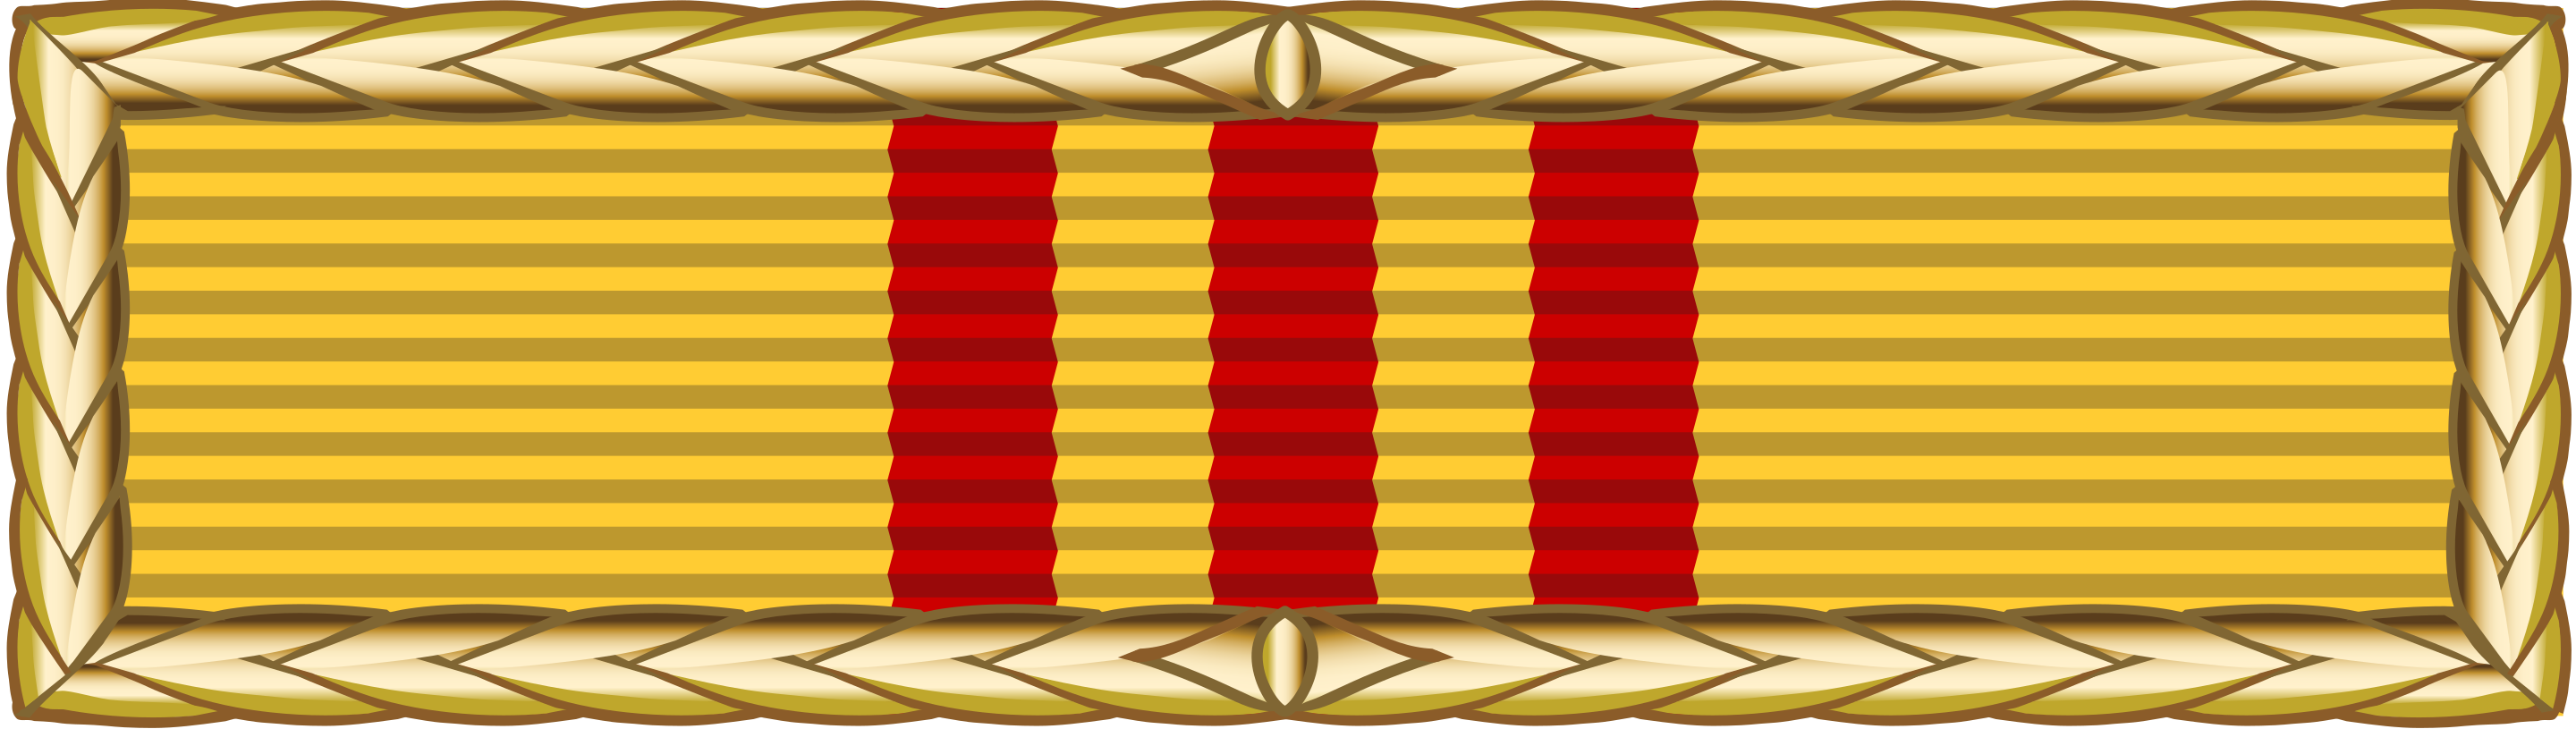 Vietnam Presidential Unit Citation